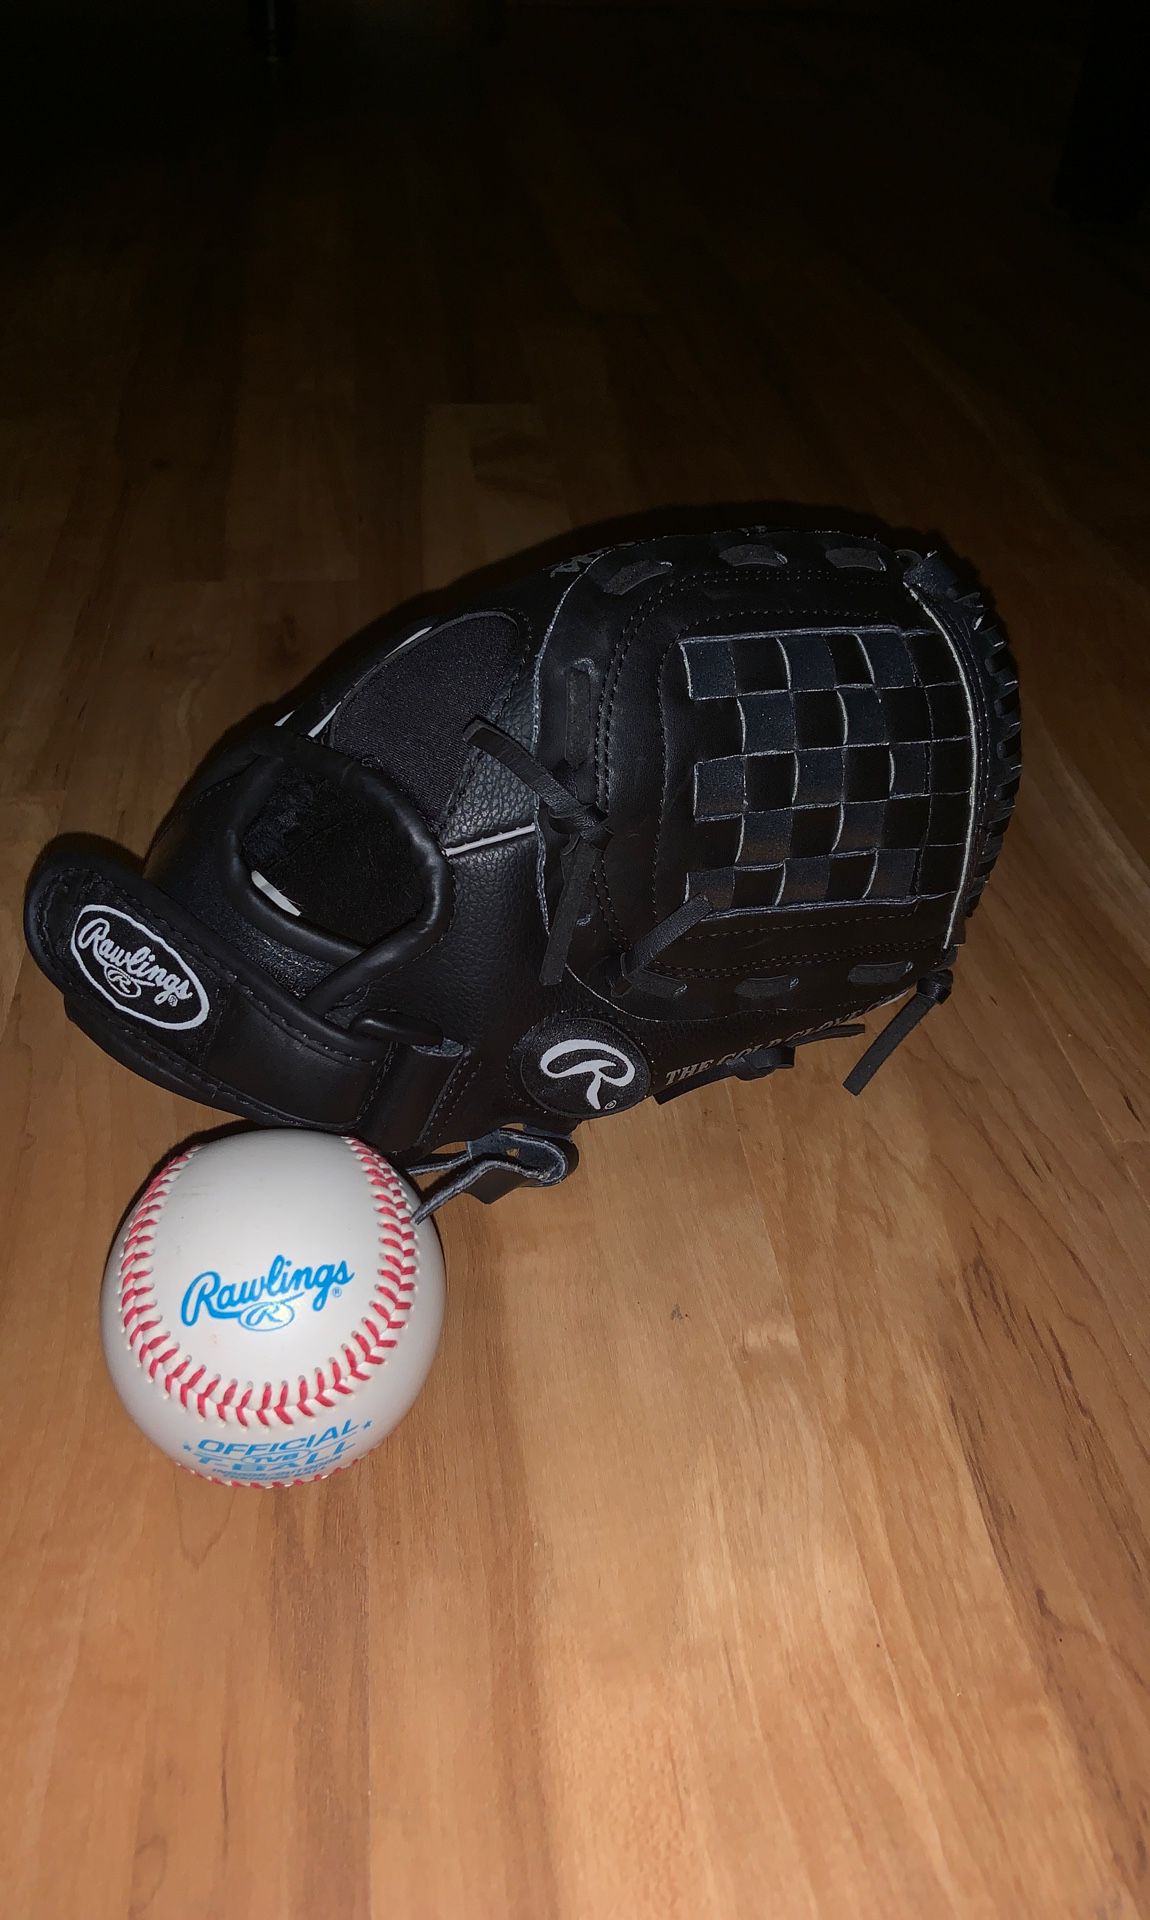 Kids baseball glove and ball